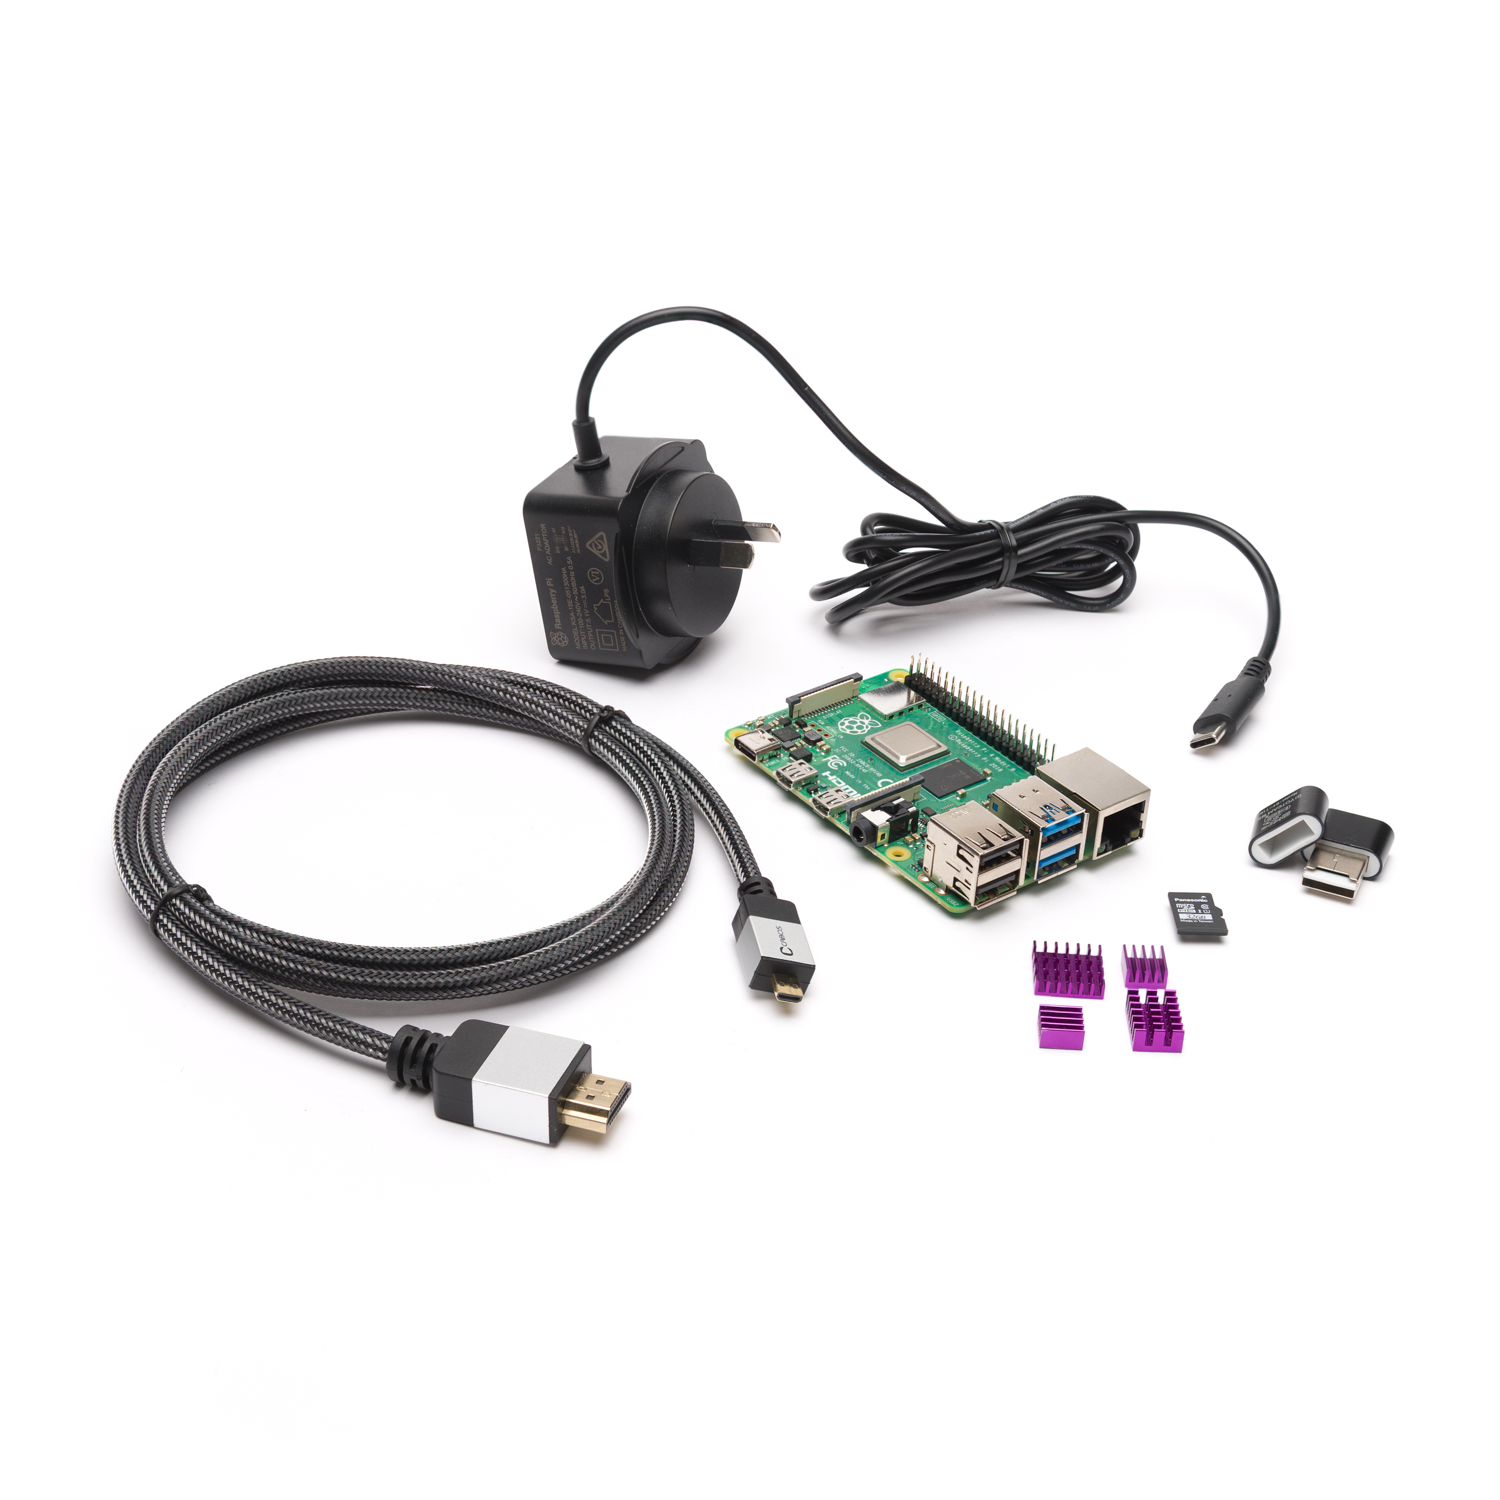 Raspberry Pi 5 Starter Kit 4GB, 8GB - The essential for Raspberry Pi 5